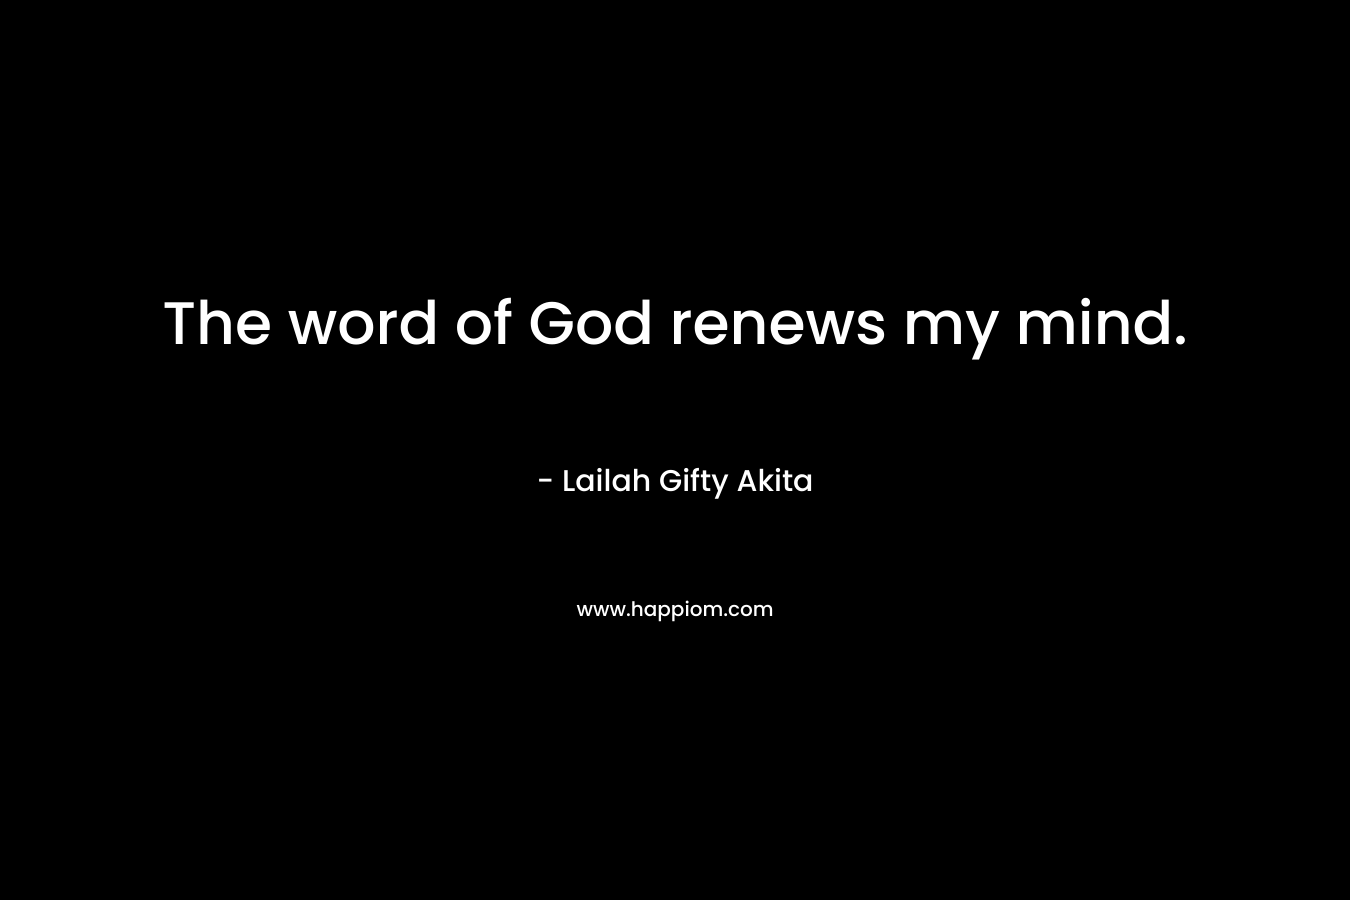 The word of God renews my mind.